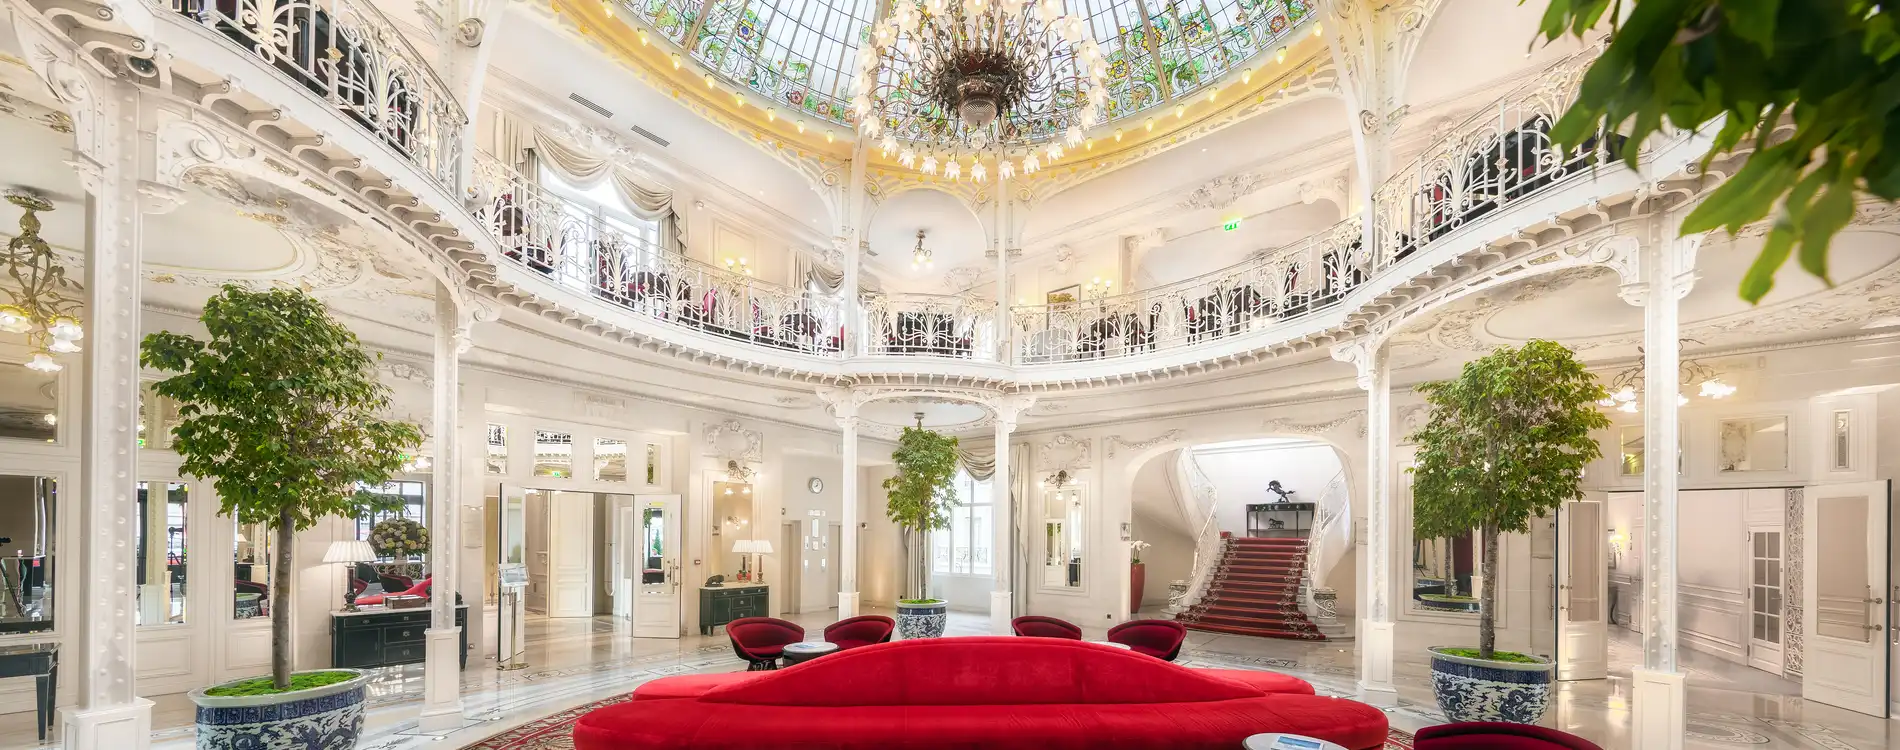 Hôtel Hermitage Monte-Carlo Lobby